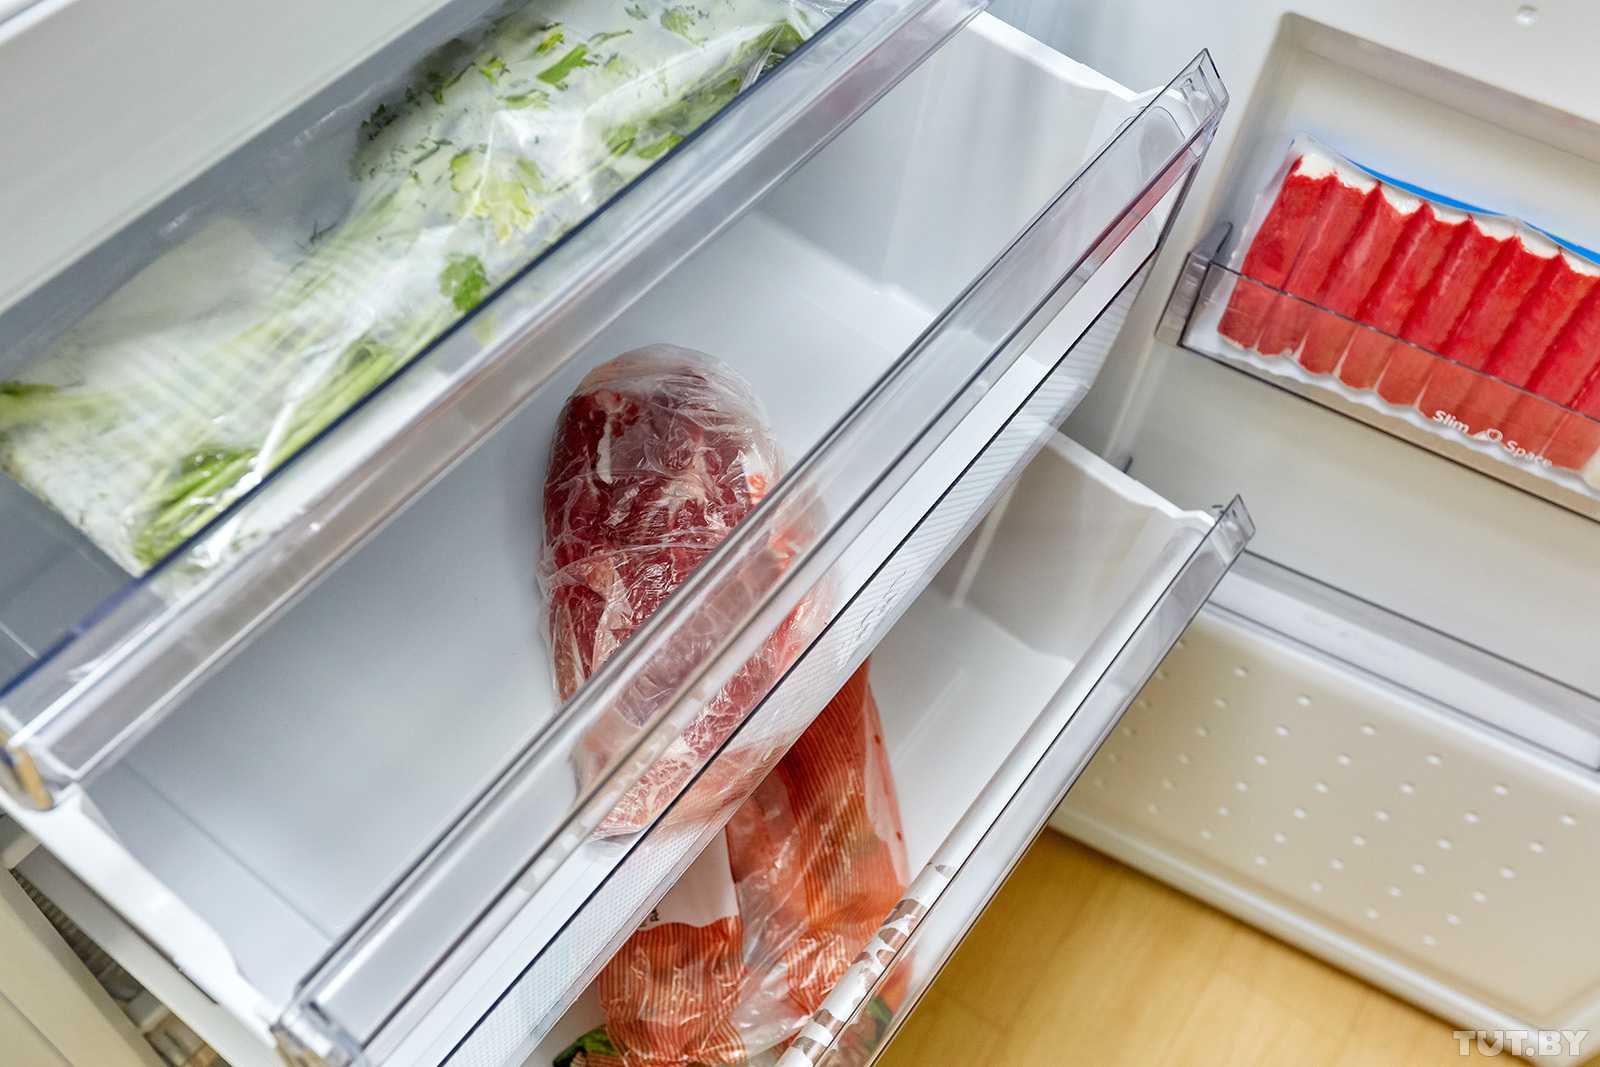 Заморозка разморозка. Хранение мяса в холодильнике. Хранение продуктов в морозилке. Холодильник с продуктами. Холодильник для заморозки.